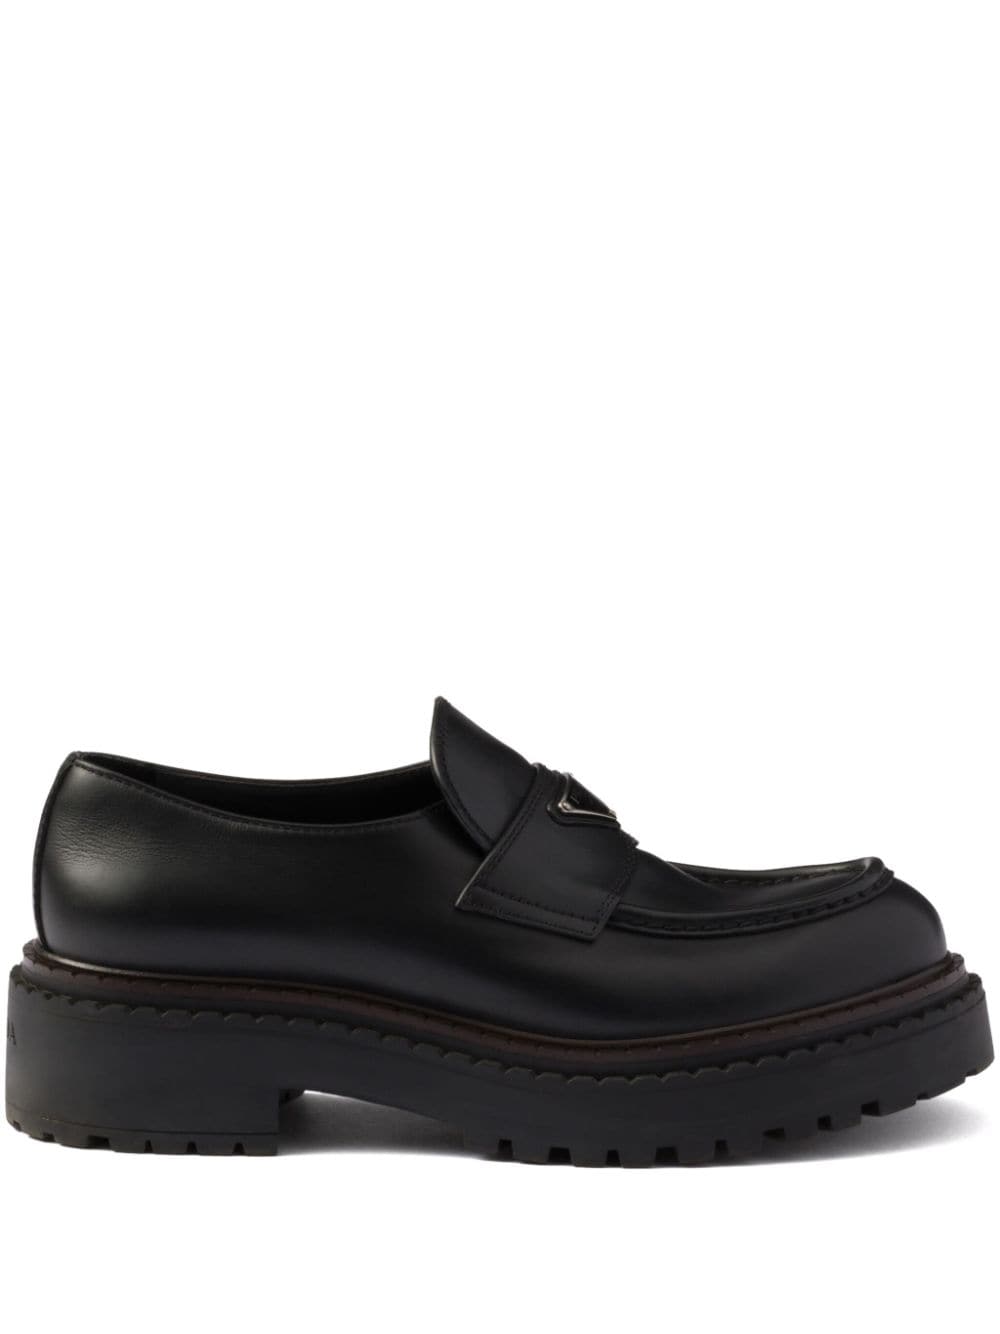 Prada leather loafers Black